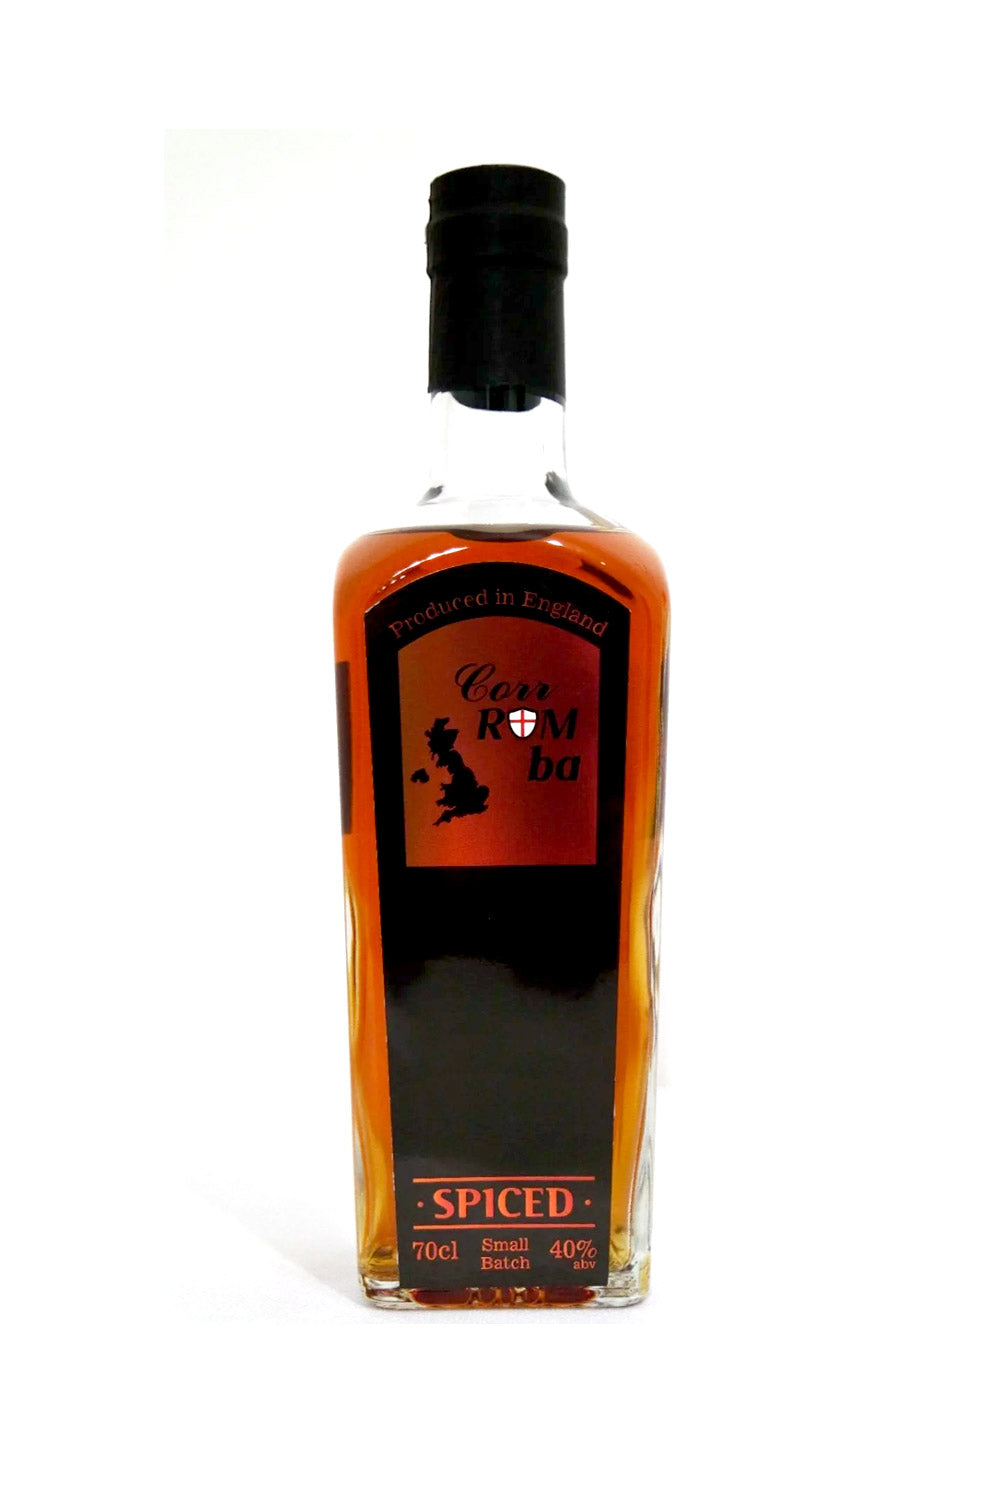 Corr-Rum-ba Spiced